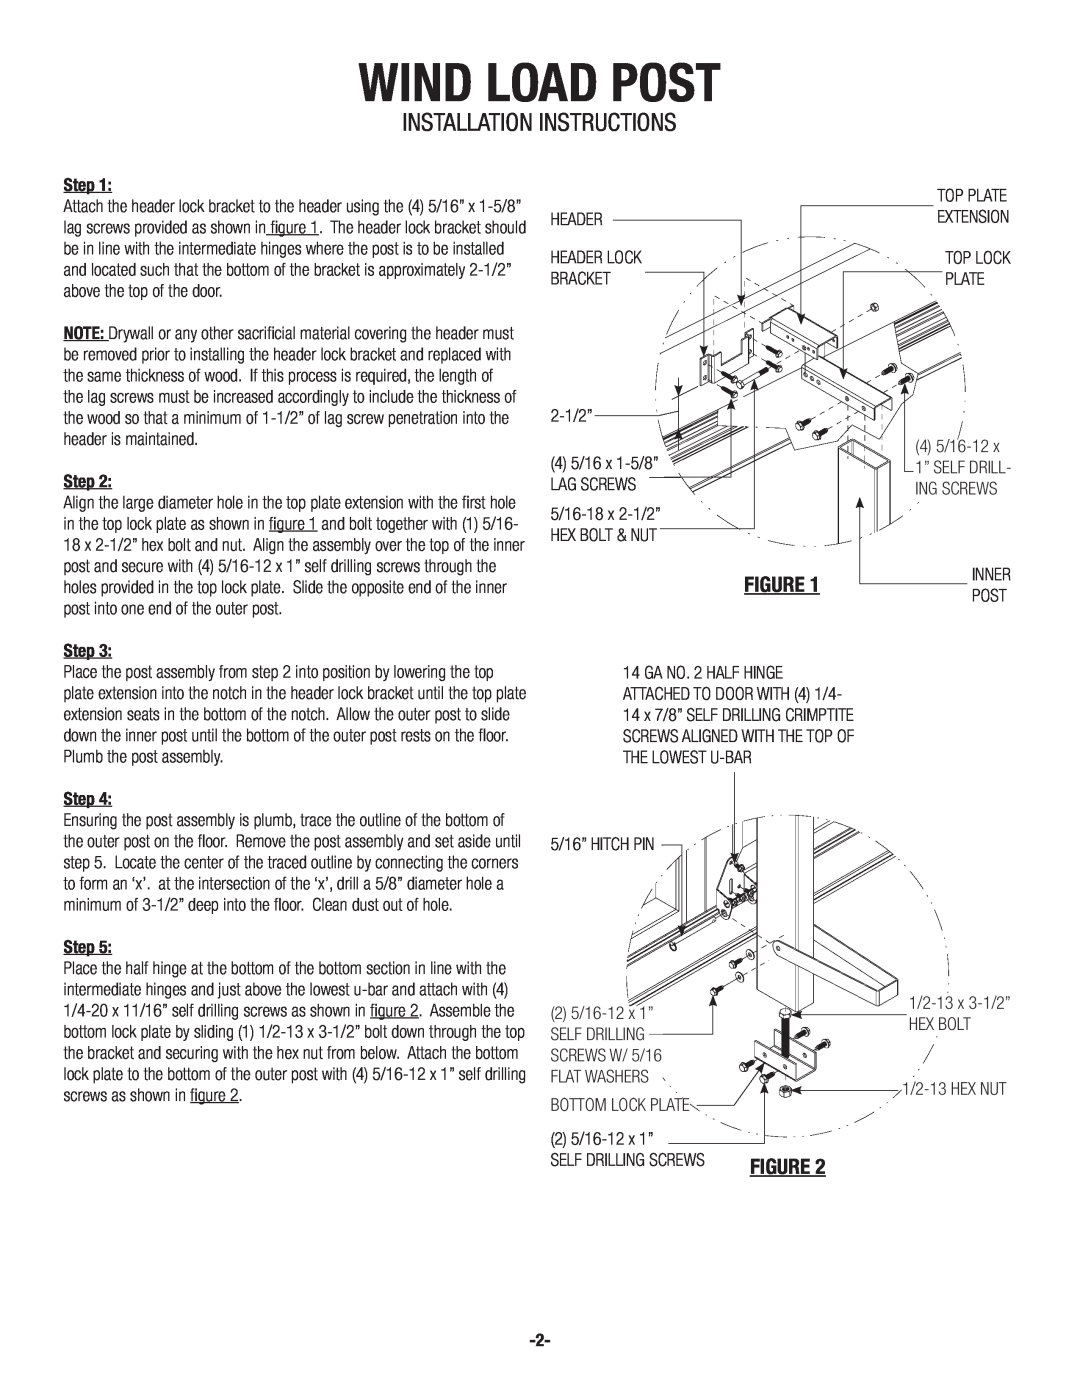 Wayne-Dalton 8124, 8100, 8024 installation instructions Wind Load Post, Installation Instructions 